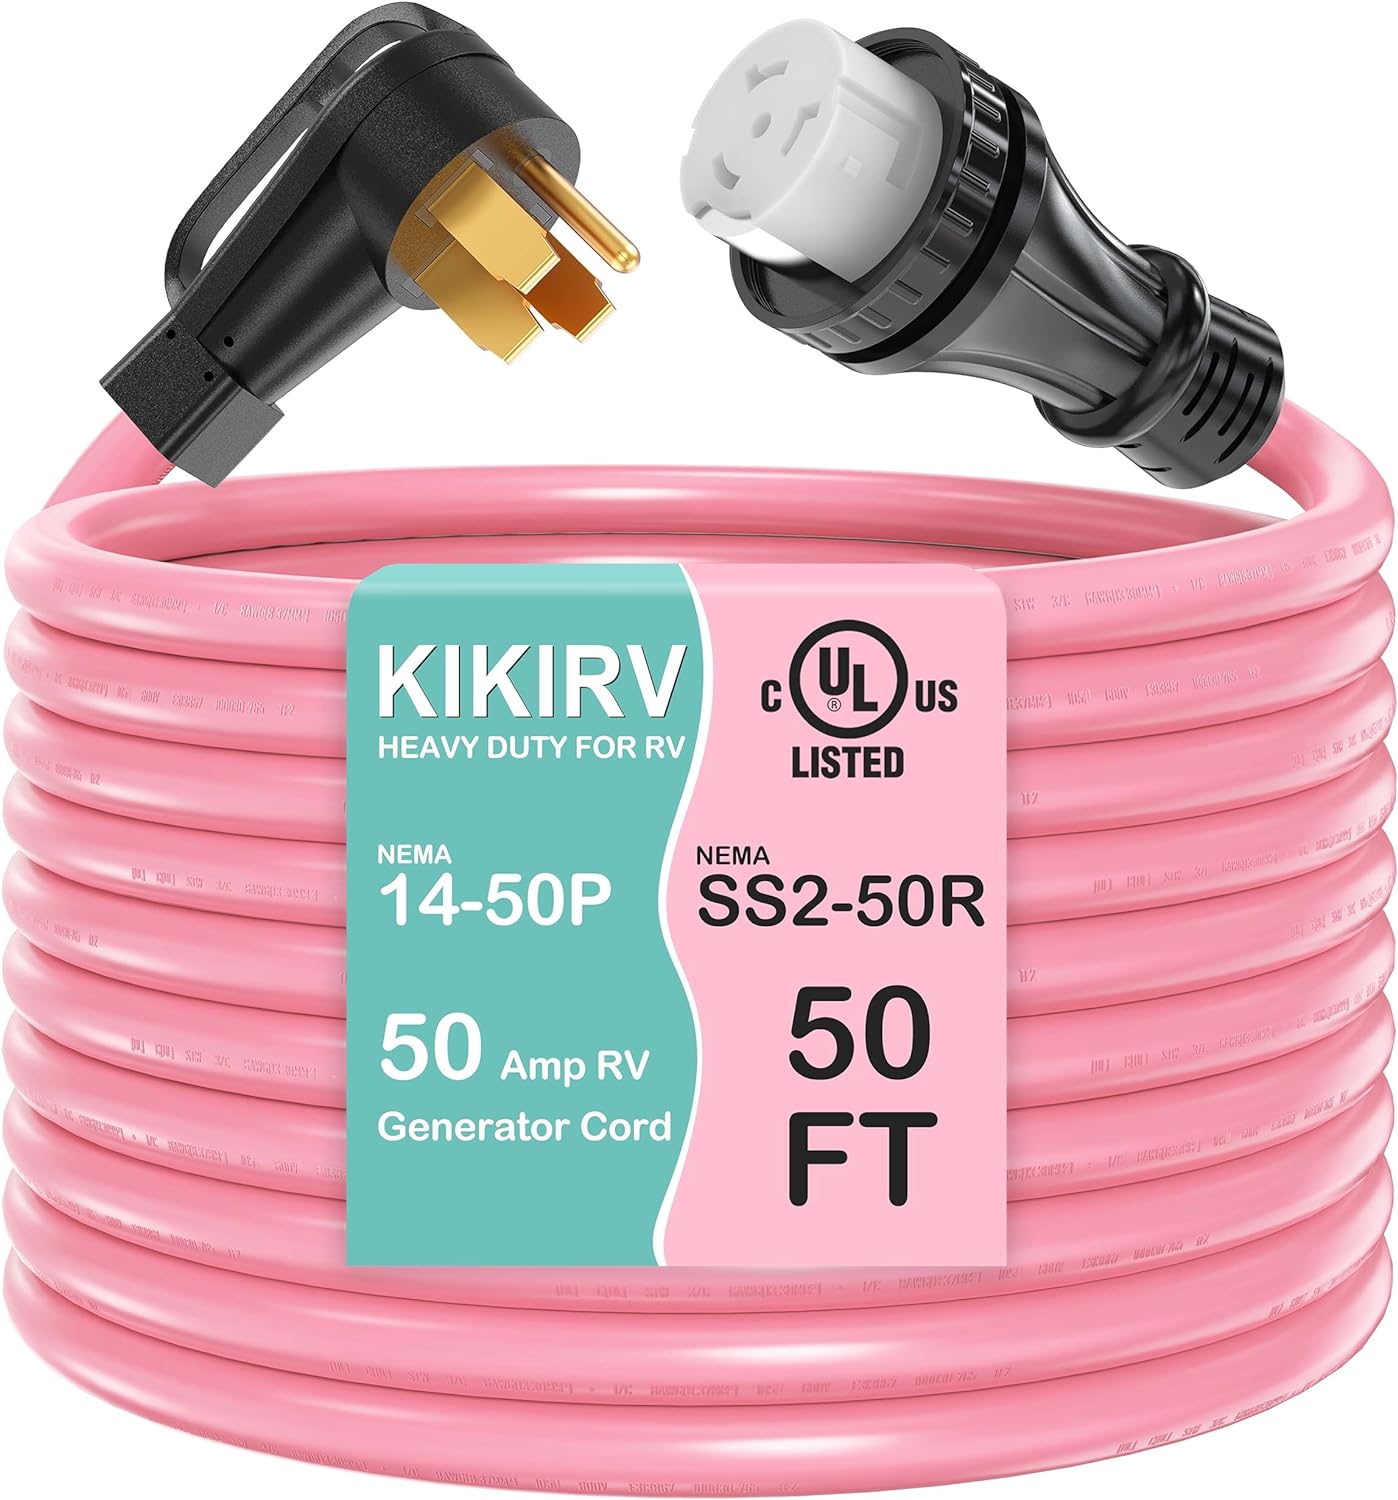 KIKIRV 50 Amp RV/Generator Cord Review